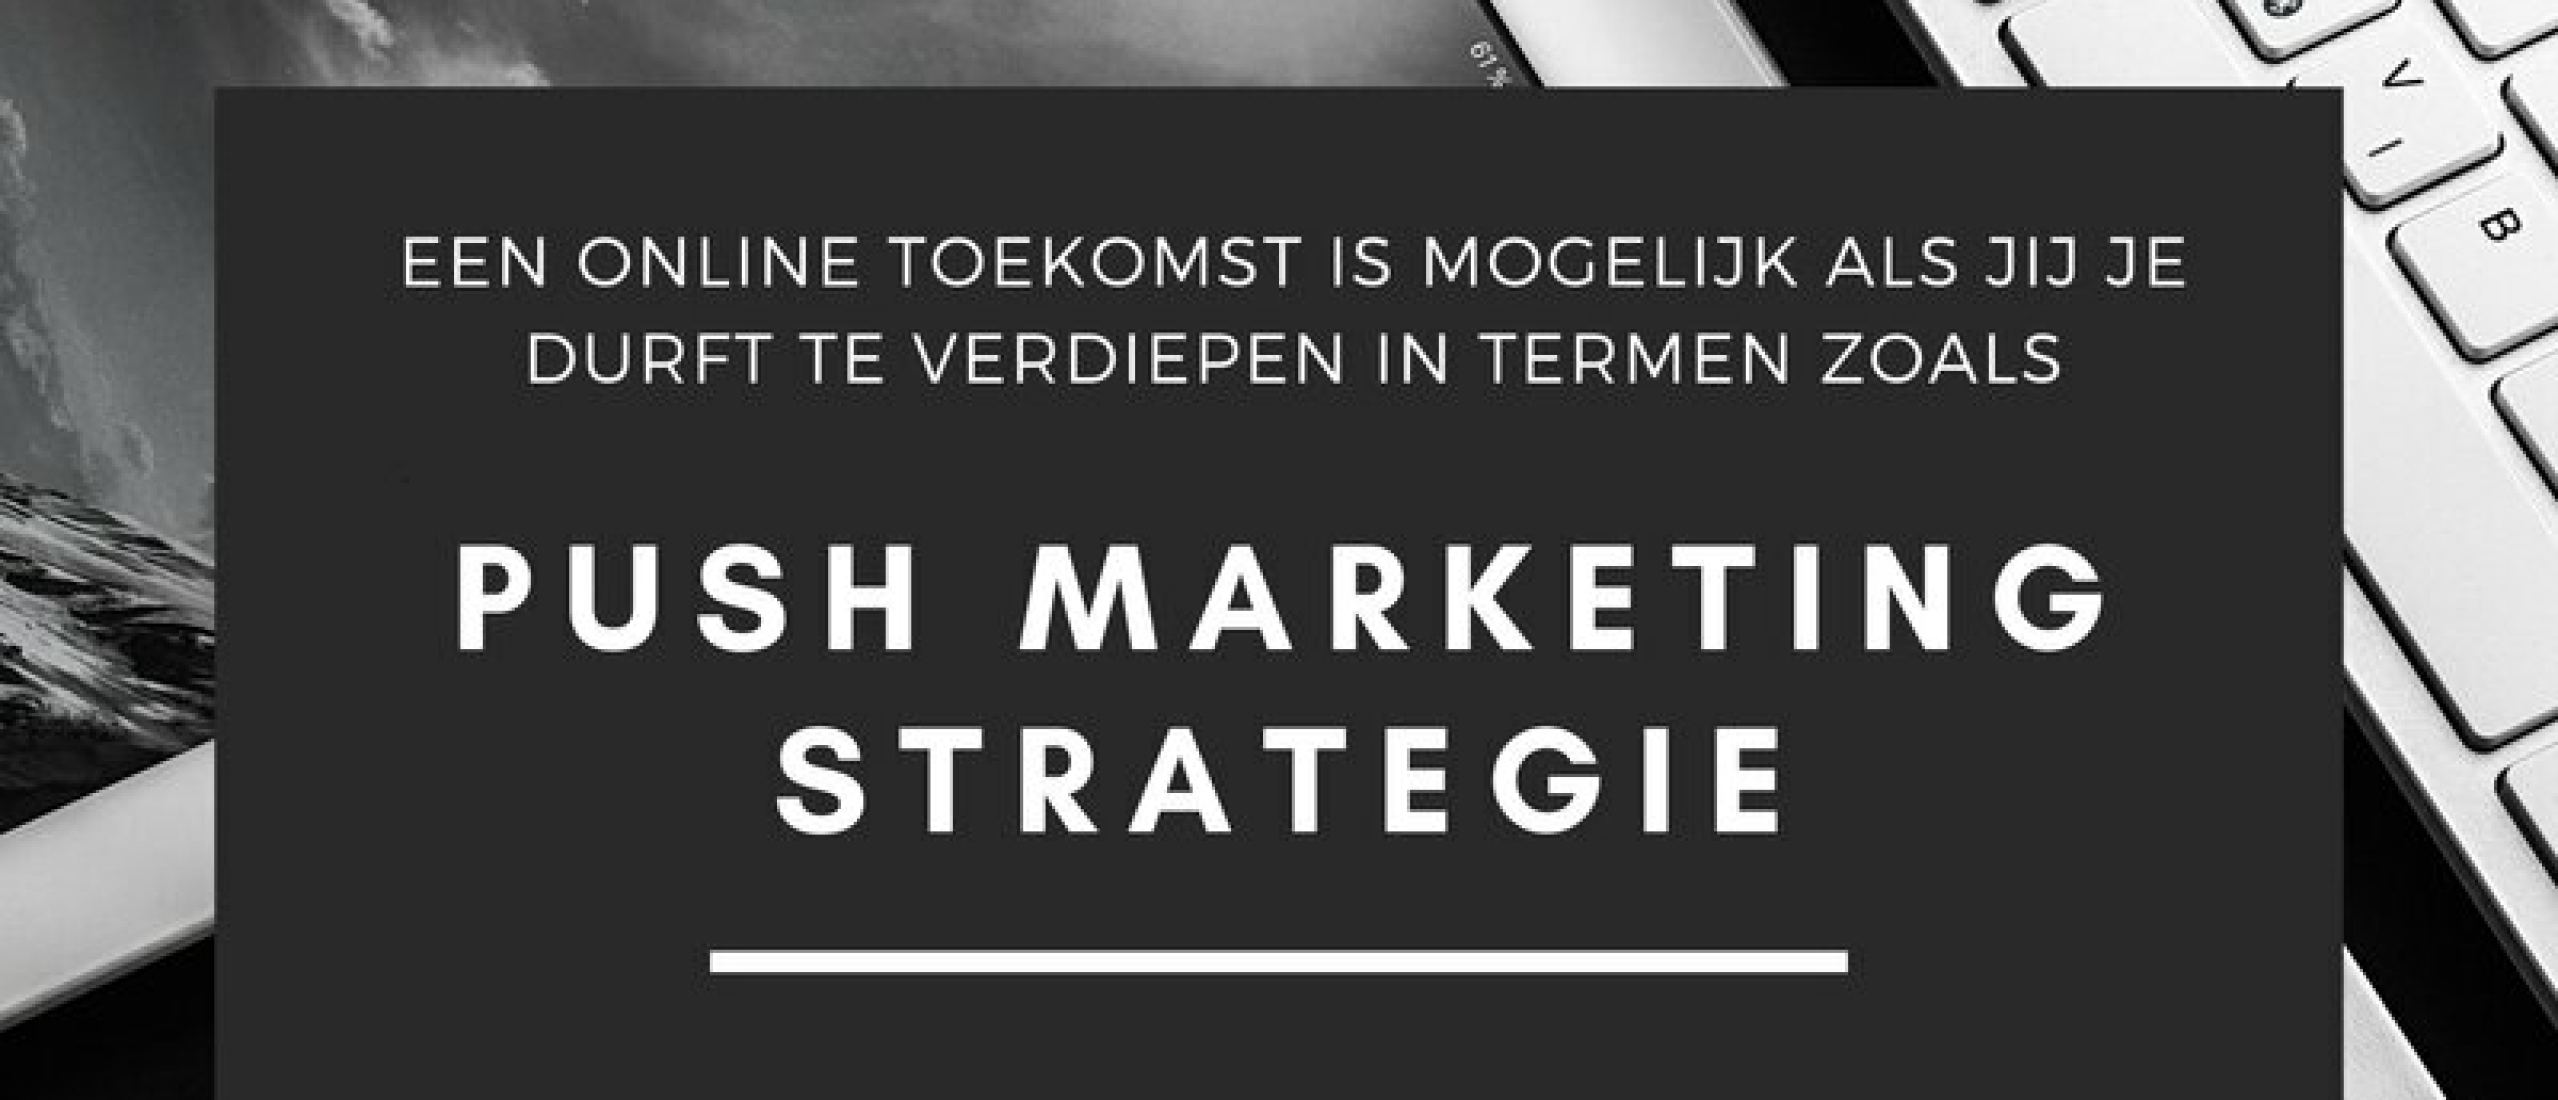 Push Marketing Strategie